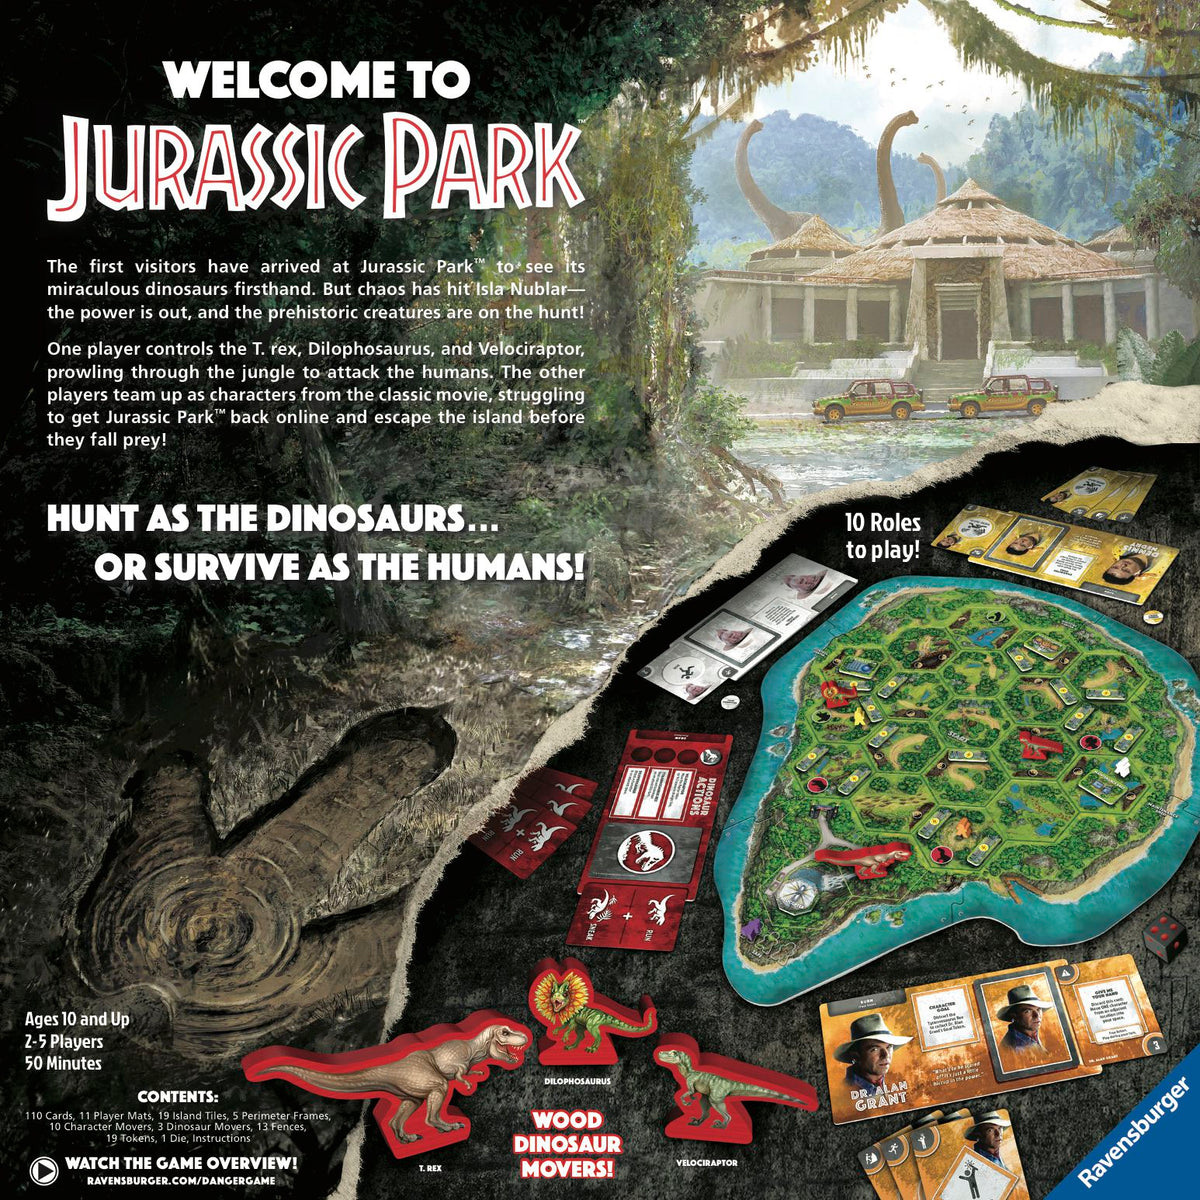 Jurassic Park Danger! Adventure Strategy Game